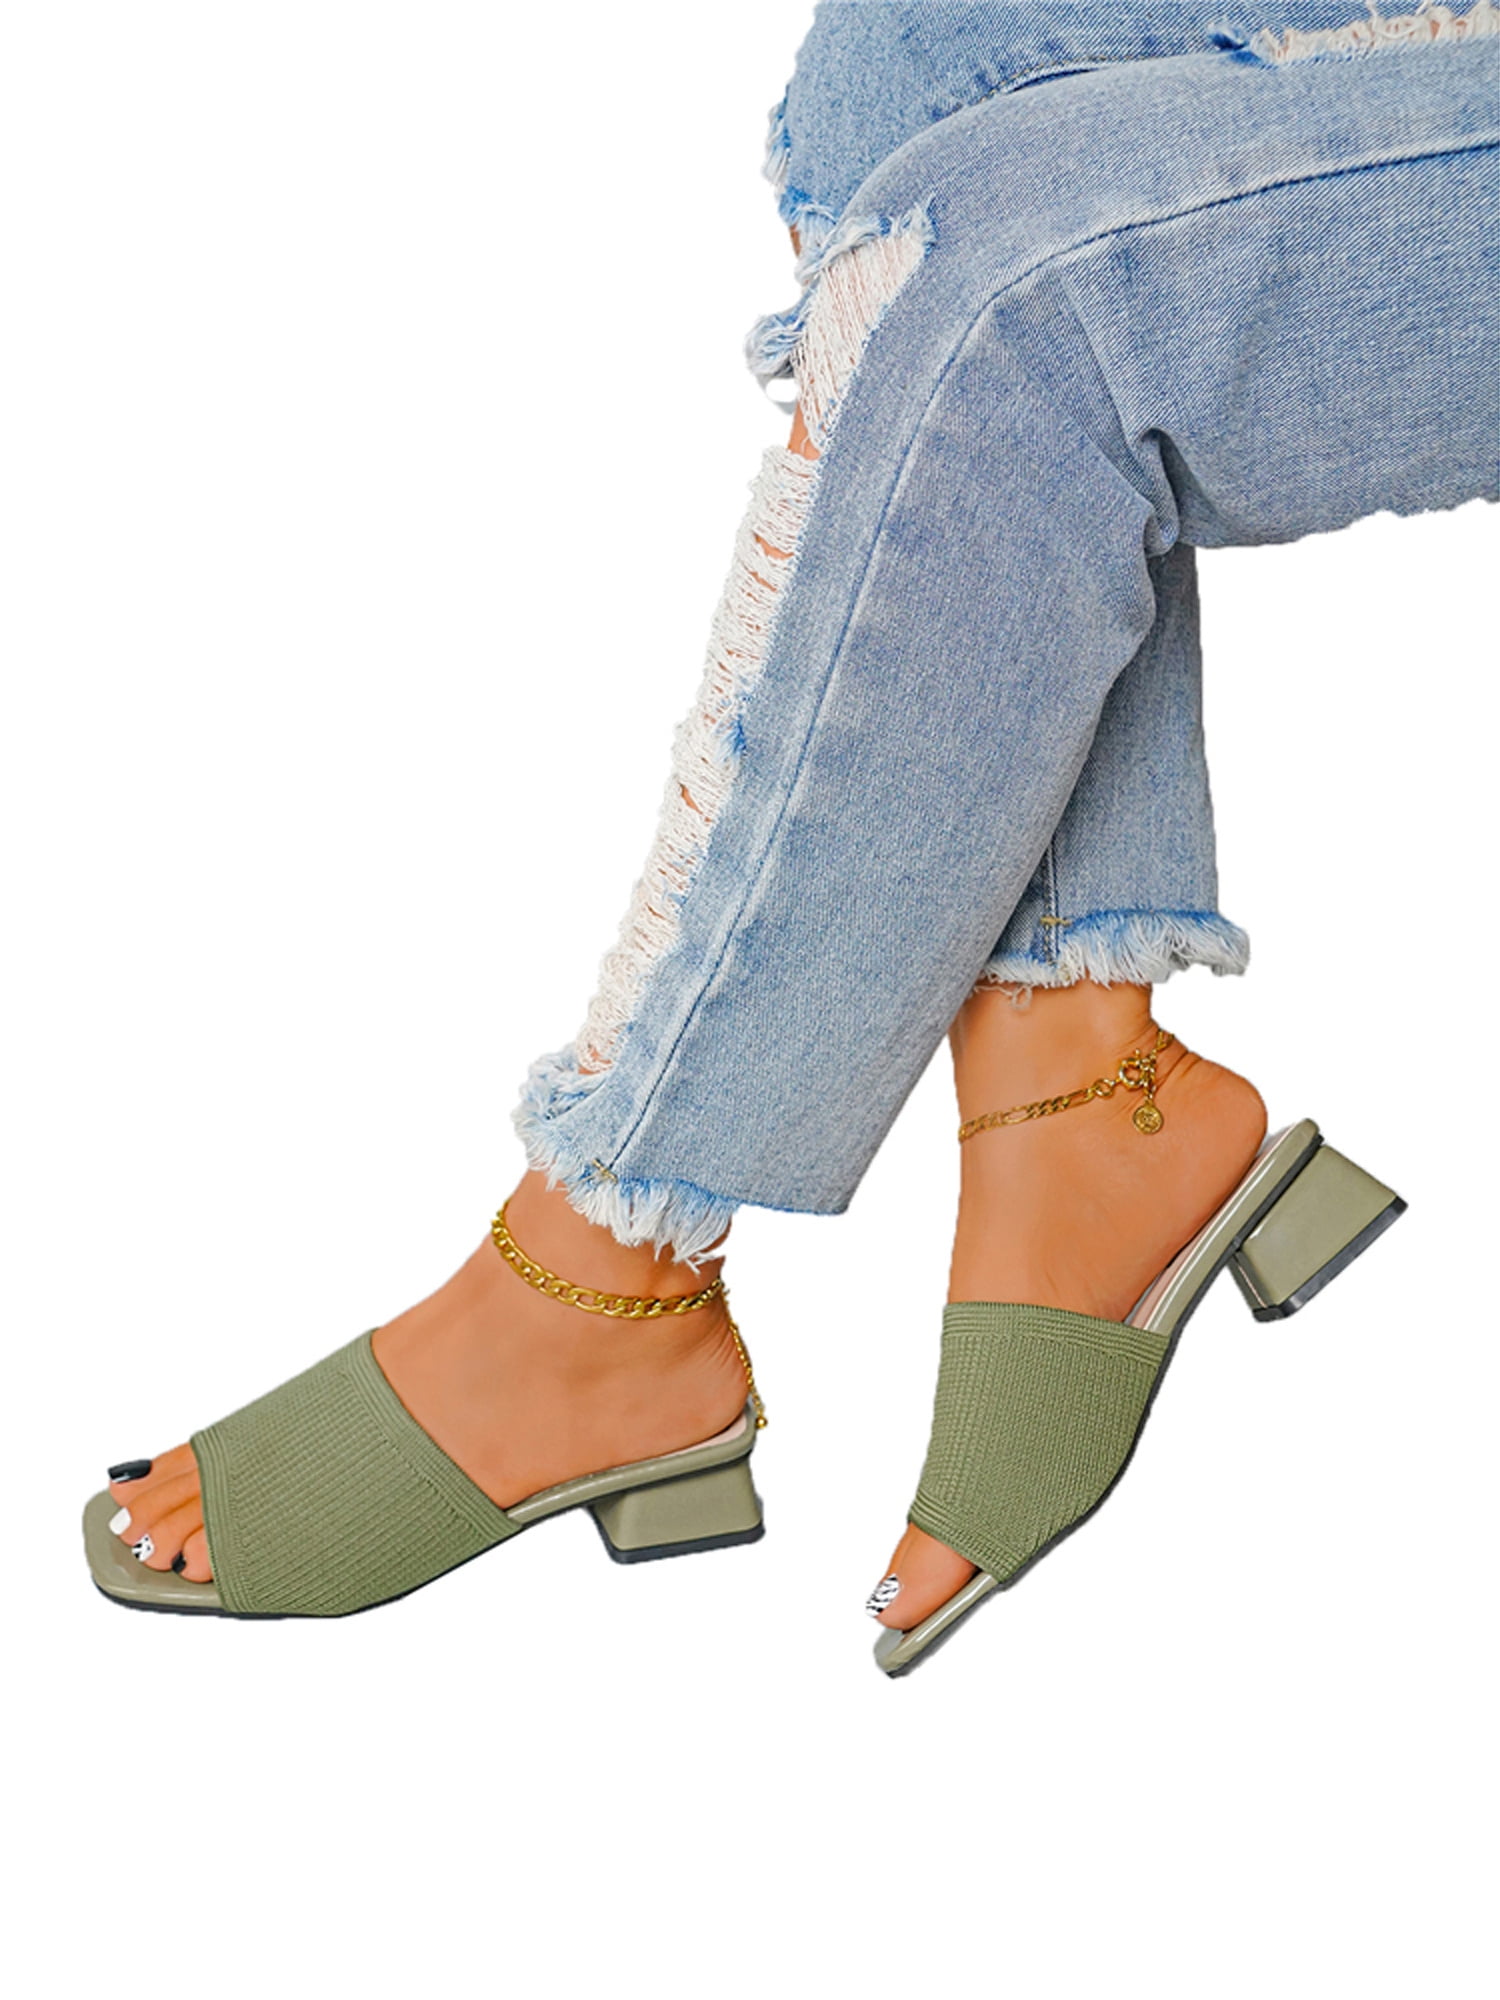 Shakub Womens Low Block Heel Slippers Knitted Slip On Summer Sliders Square Open Toe Shoes